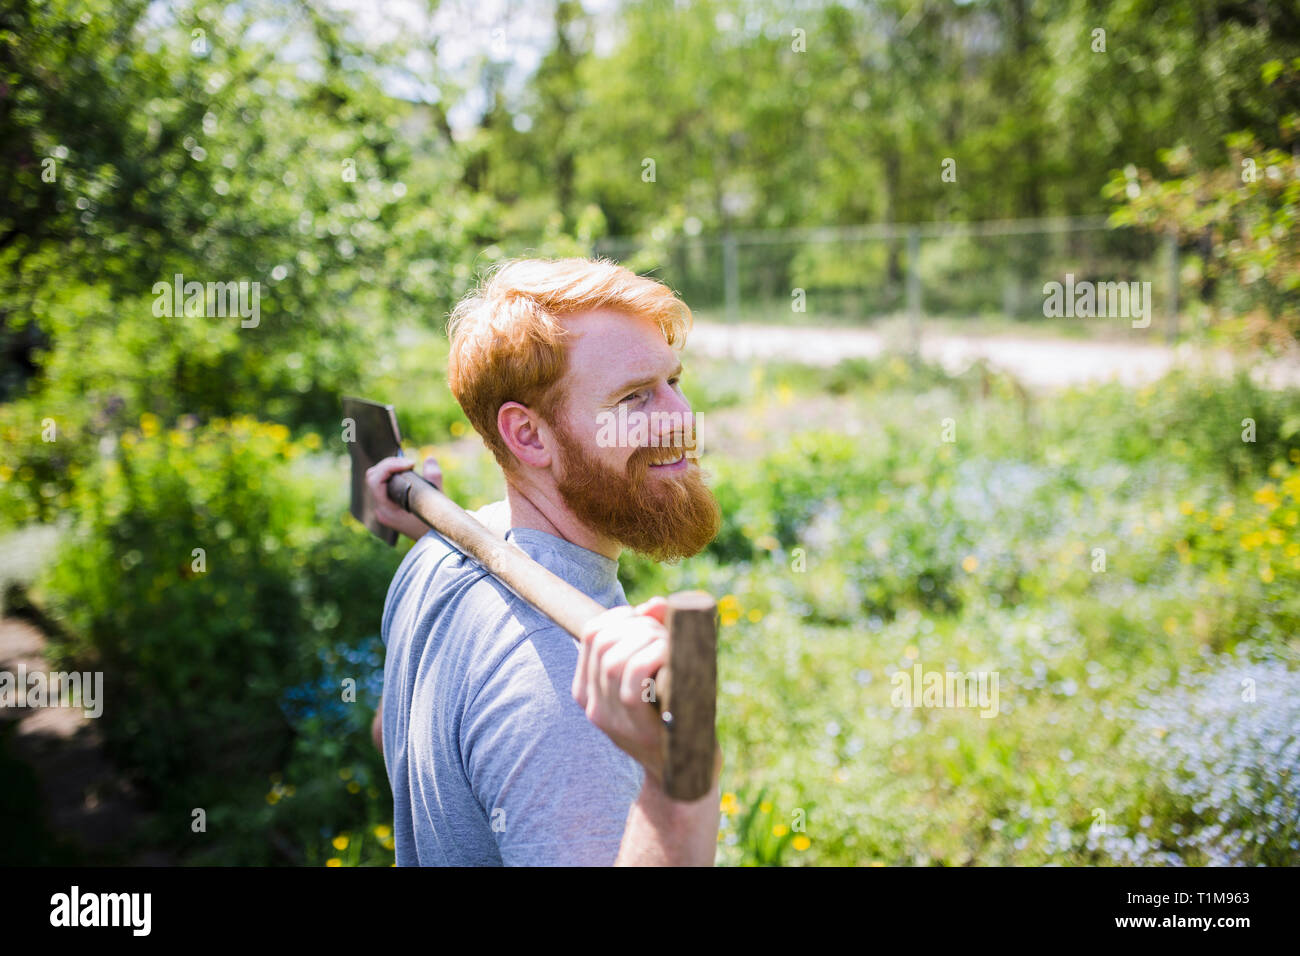 Smiling man with beard holding shovel in sunny garden Stock Photo